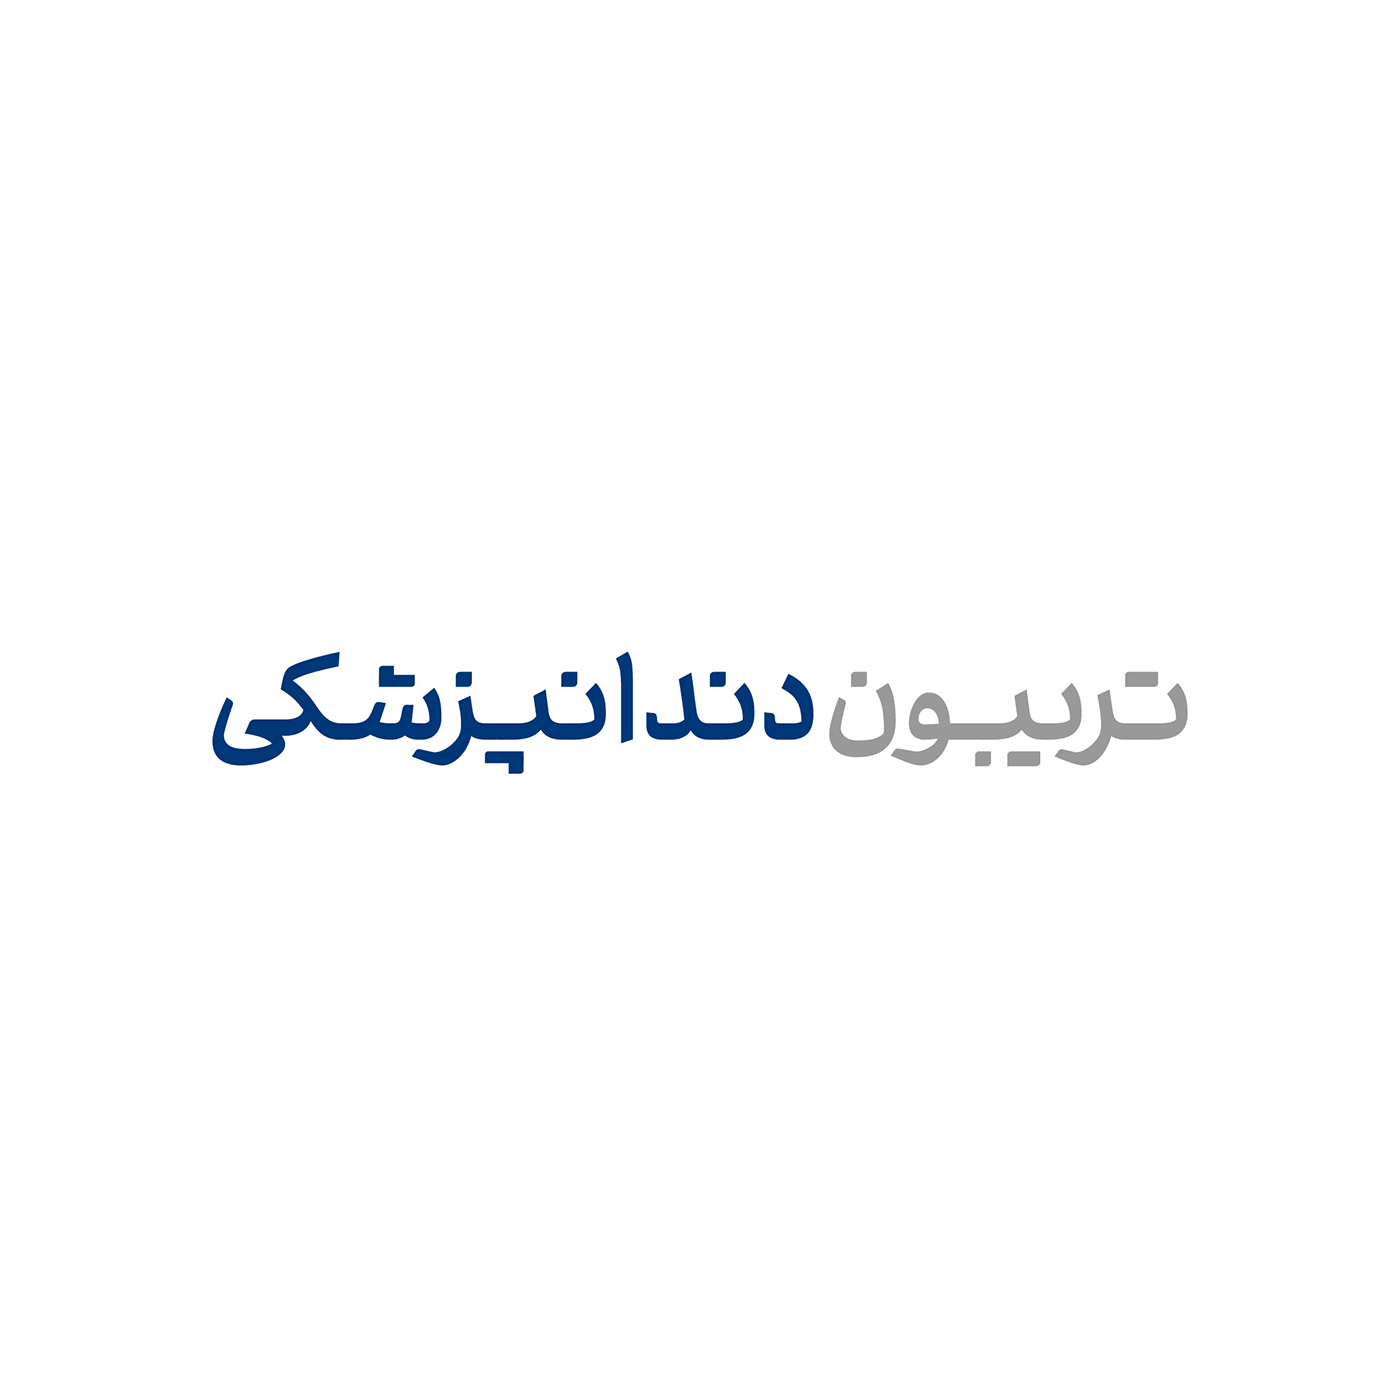 Logotype logo type typography   design persian Calligraphy   arabic lettering bilingual